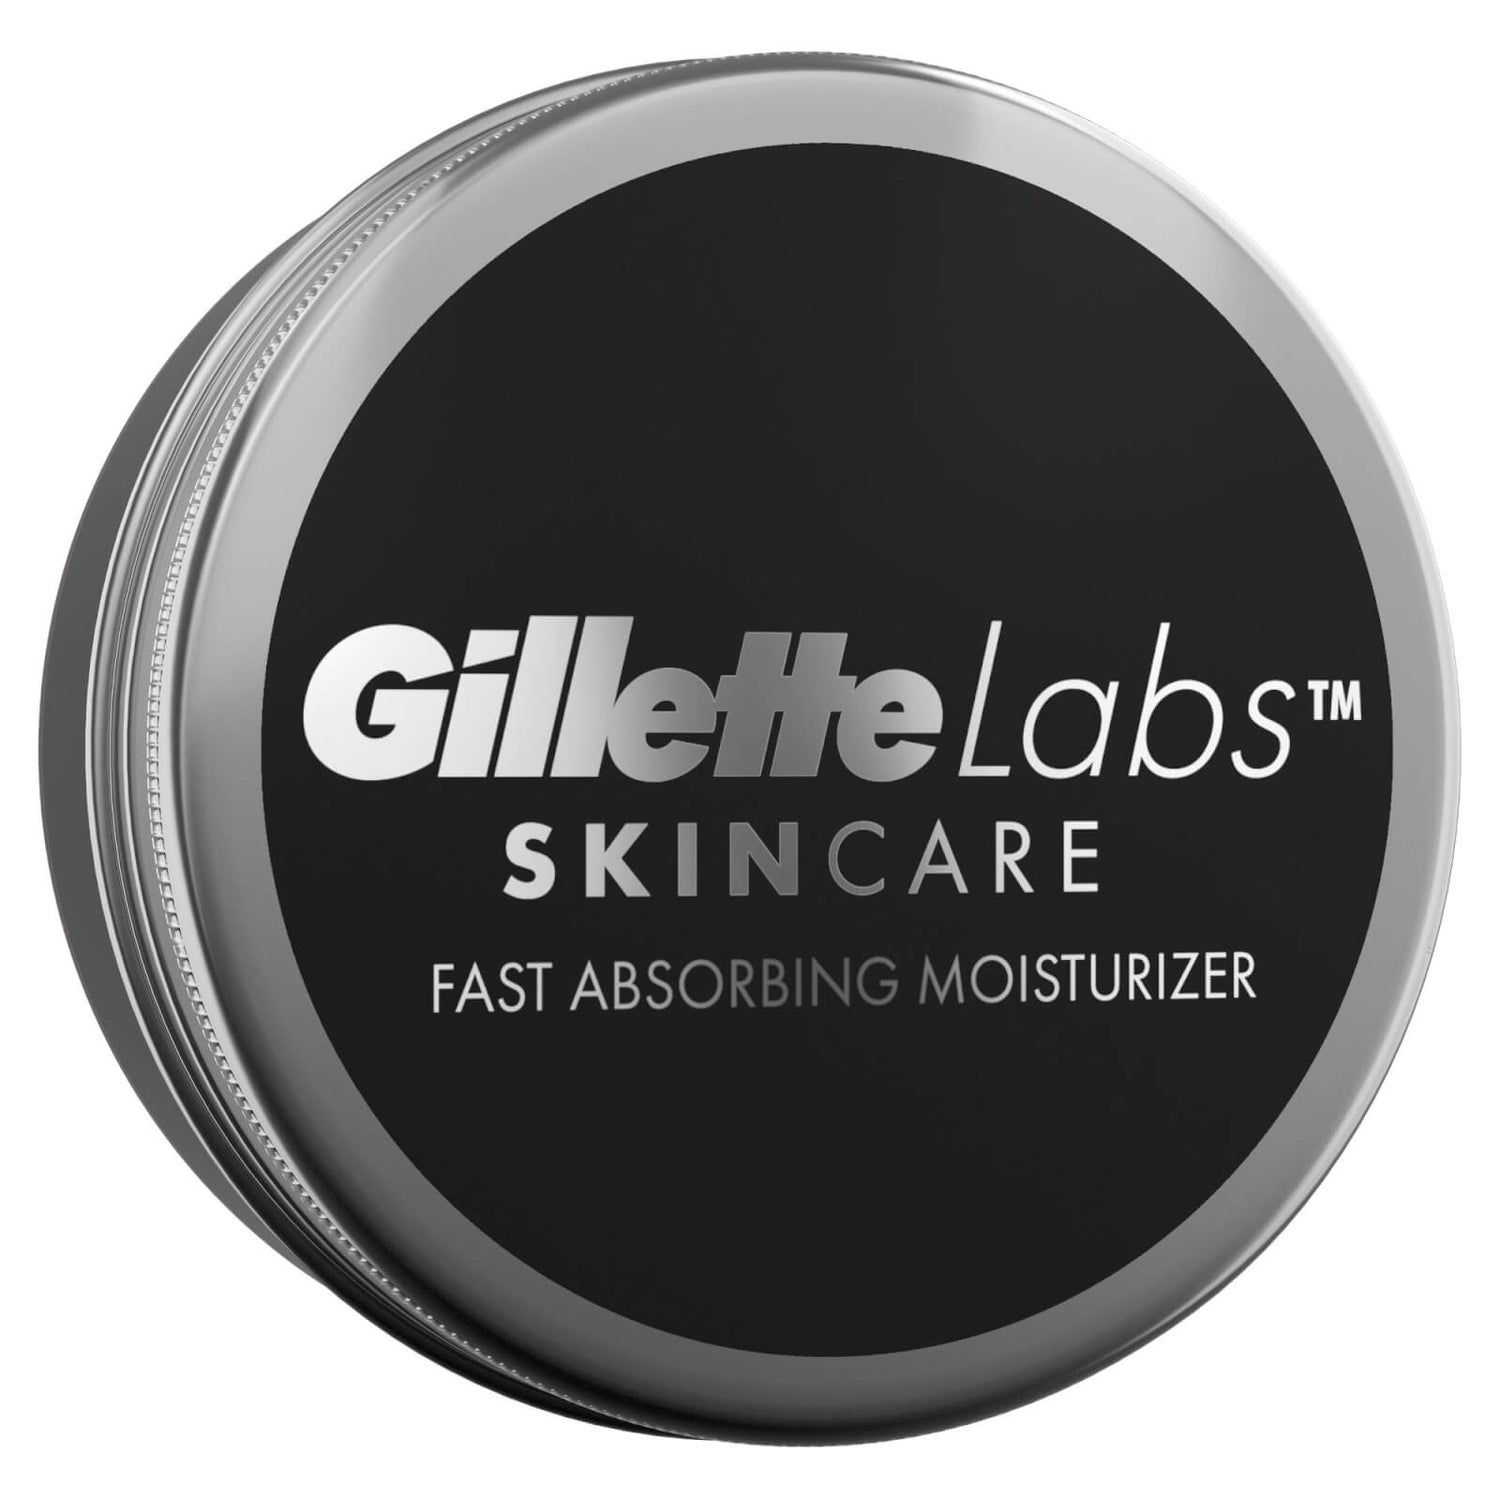 Gillette Labs Fast Absorbing Moisturiser (100ml)